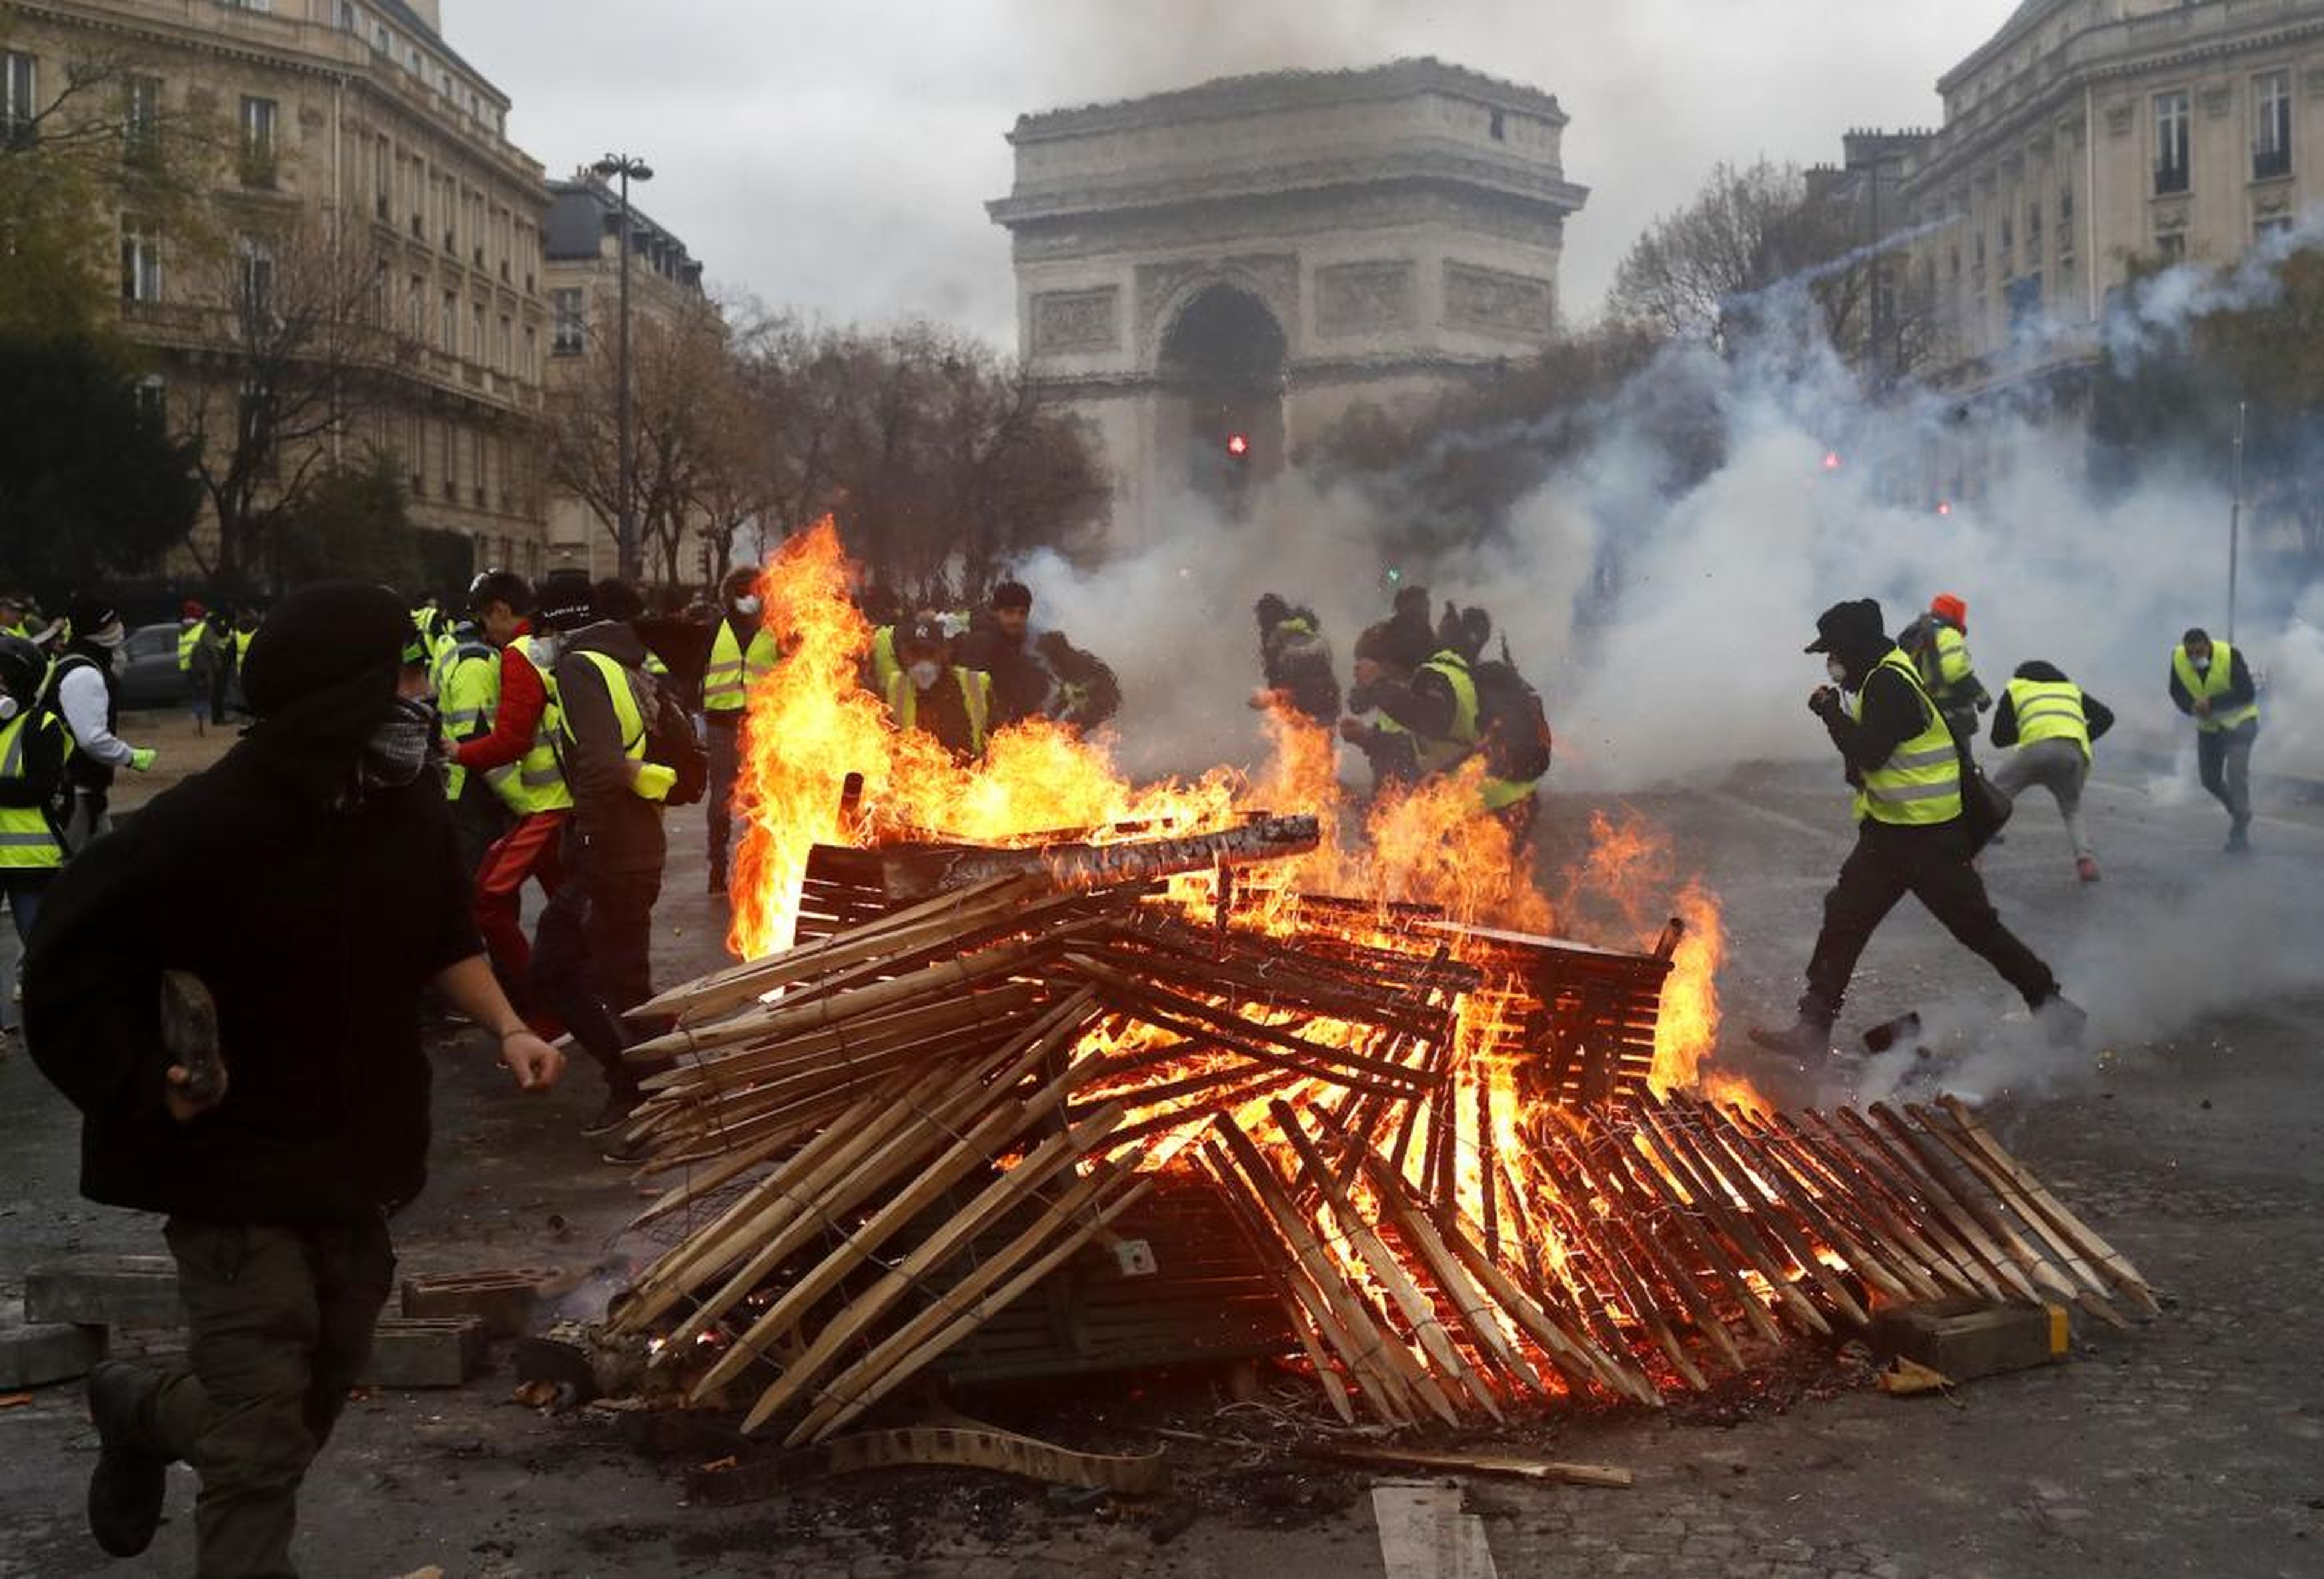 Protesters lit fires near the Arc de Triomphe.